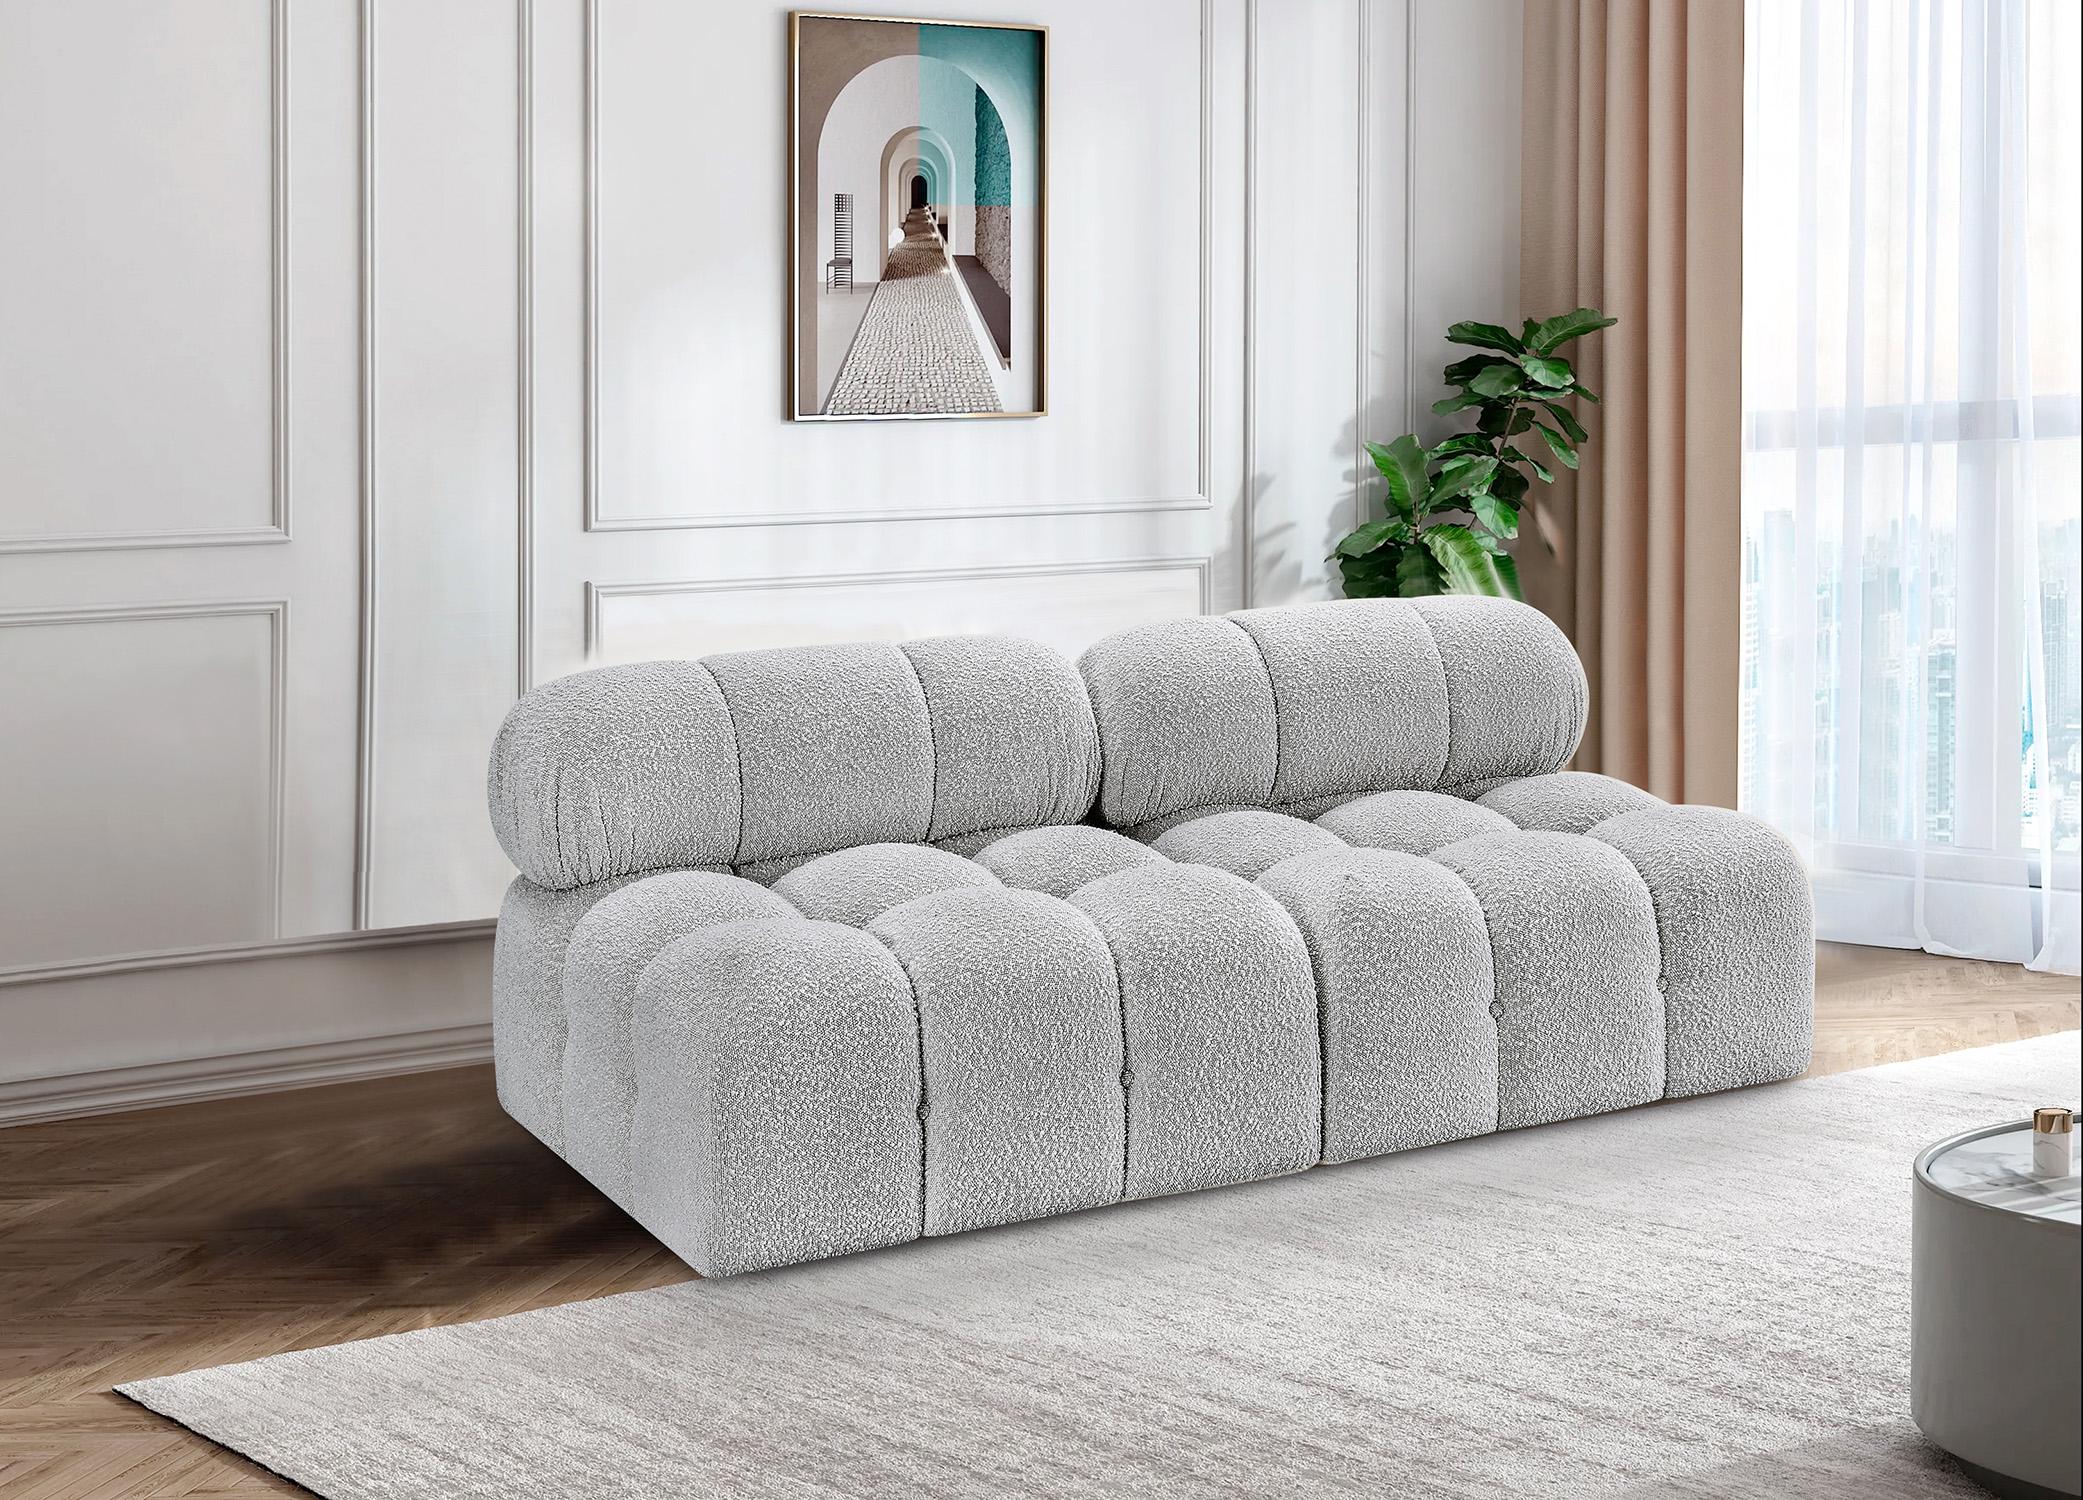 Contemporary, Modern Modular Sofa AMES 611Grey-S68B 611Grey-S68B in Gray 